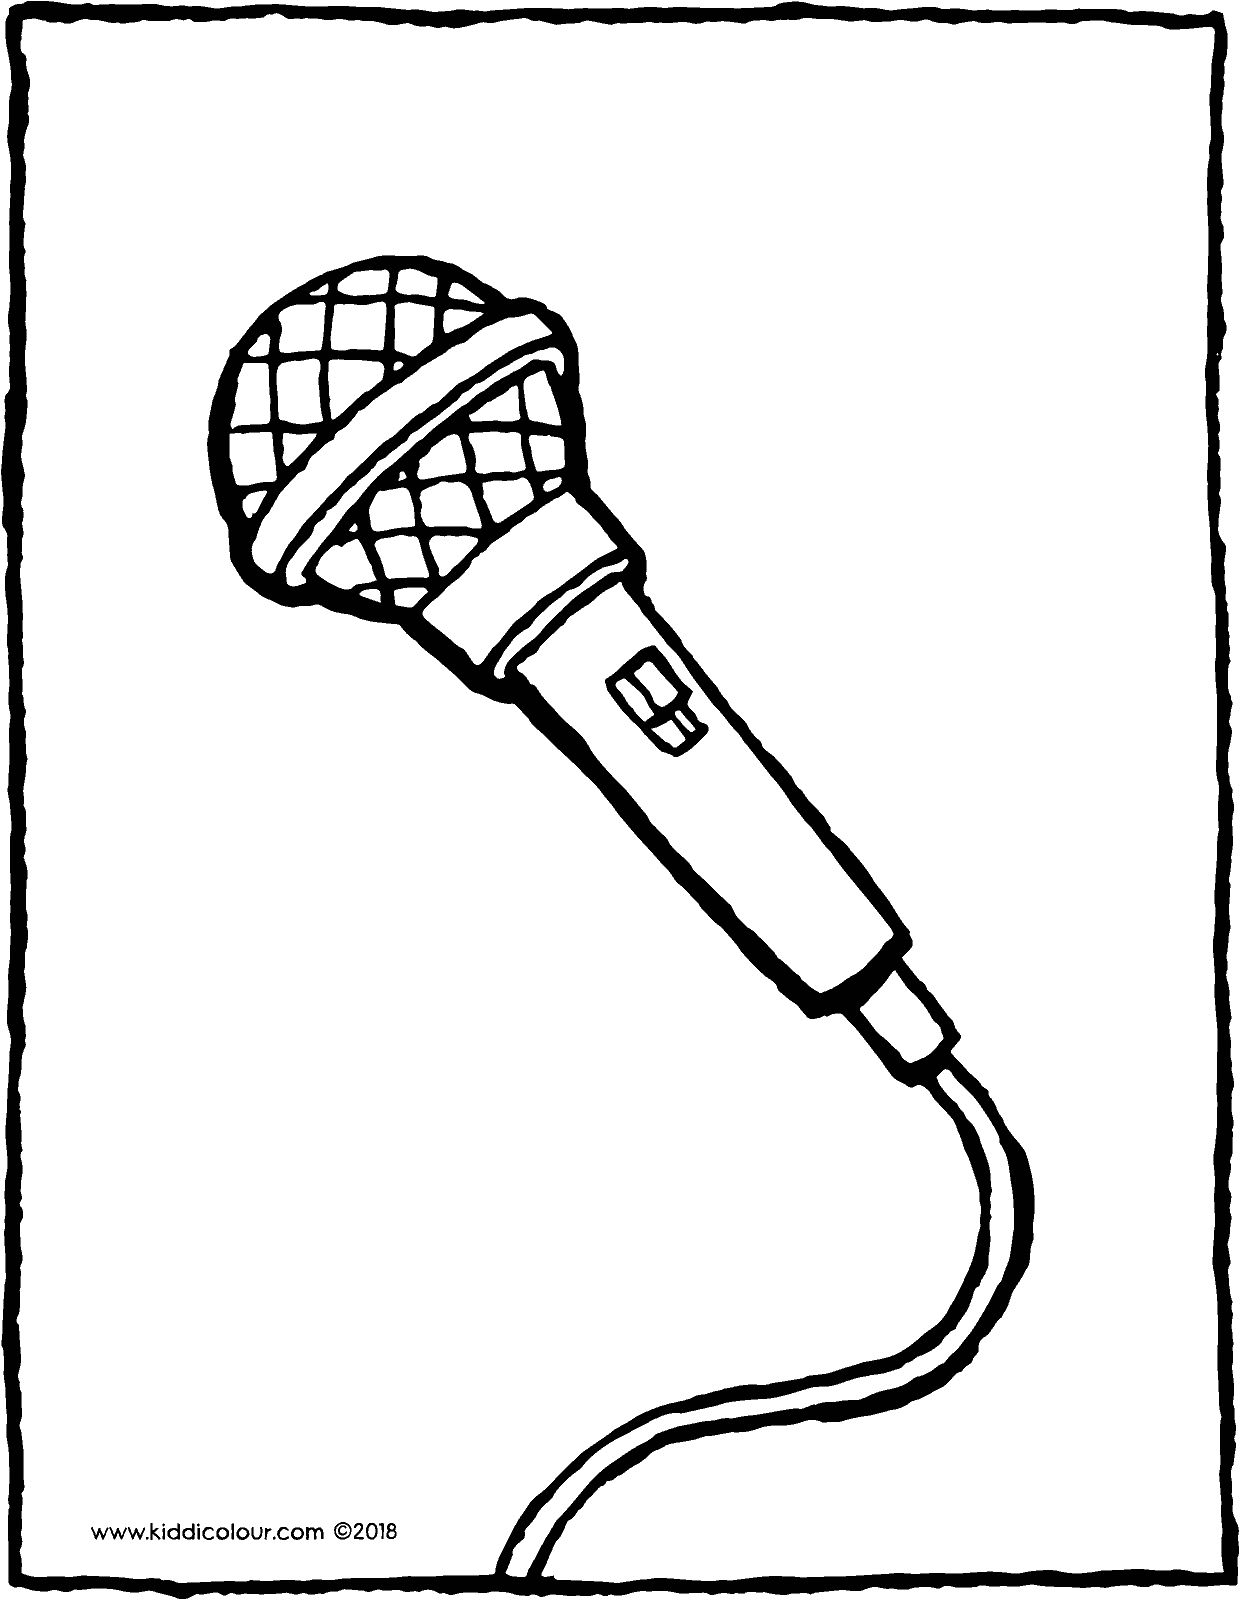 microphone - kiddicolour